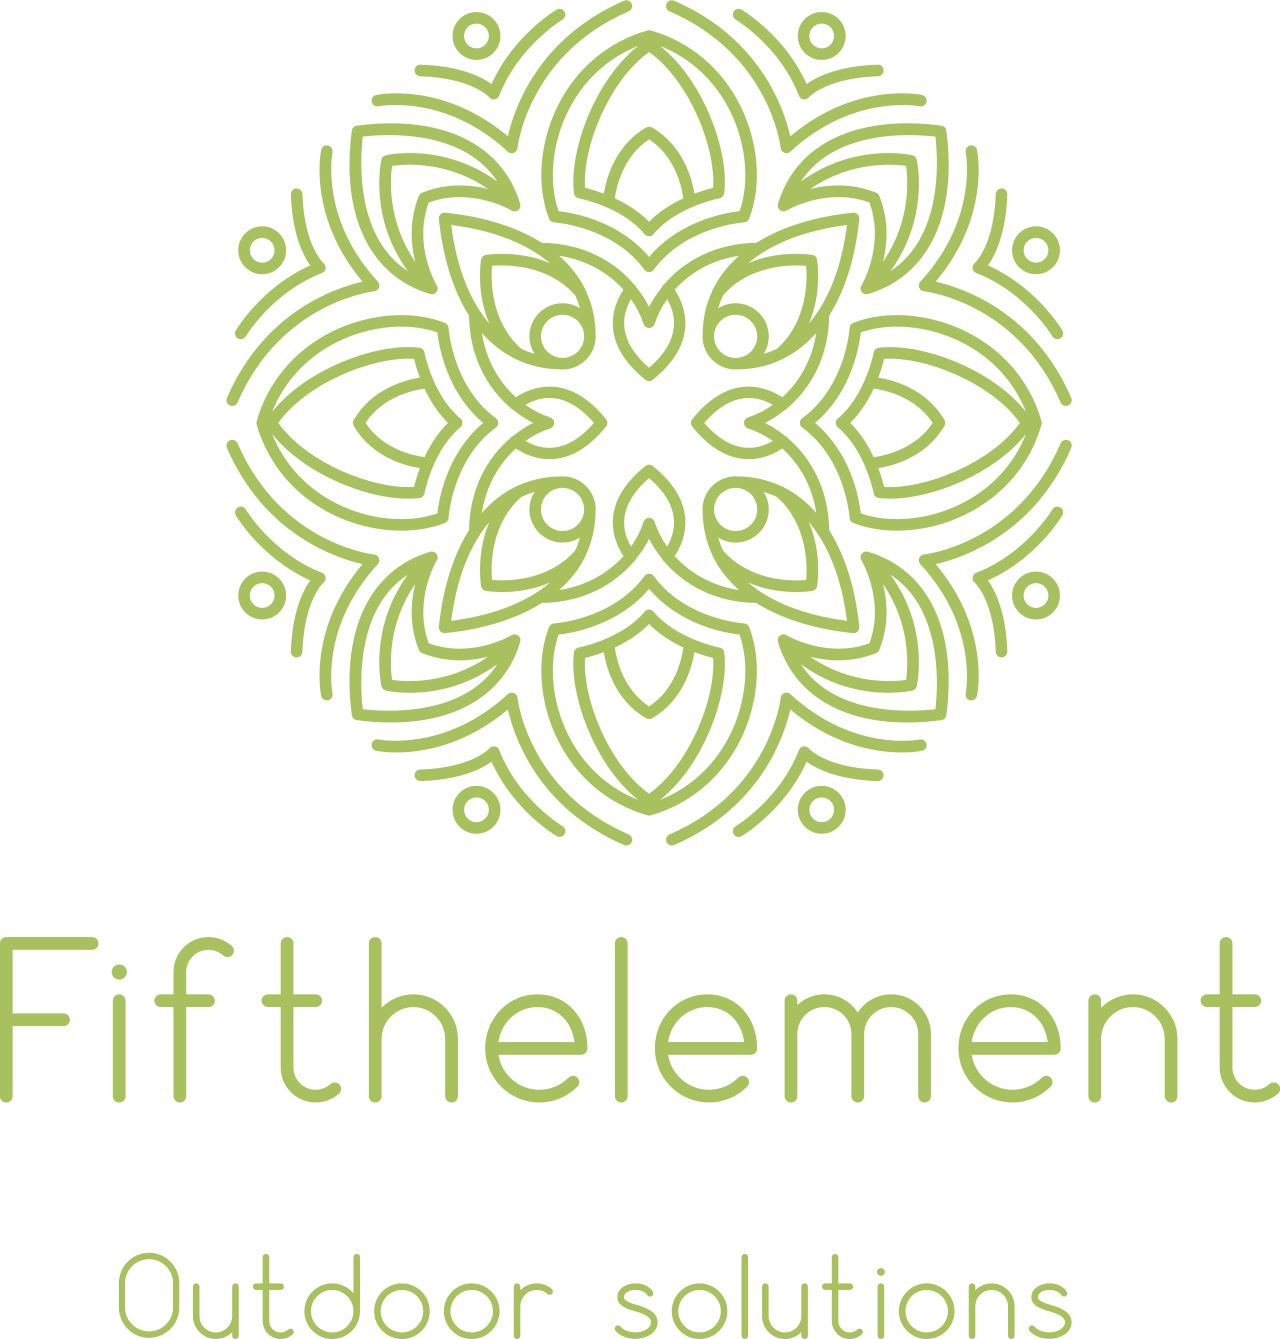 Fifthelement's logo